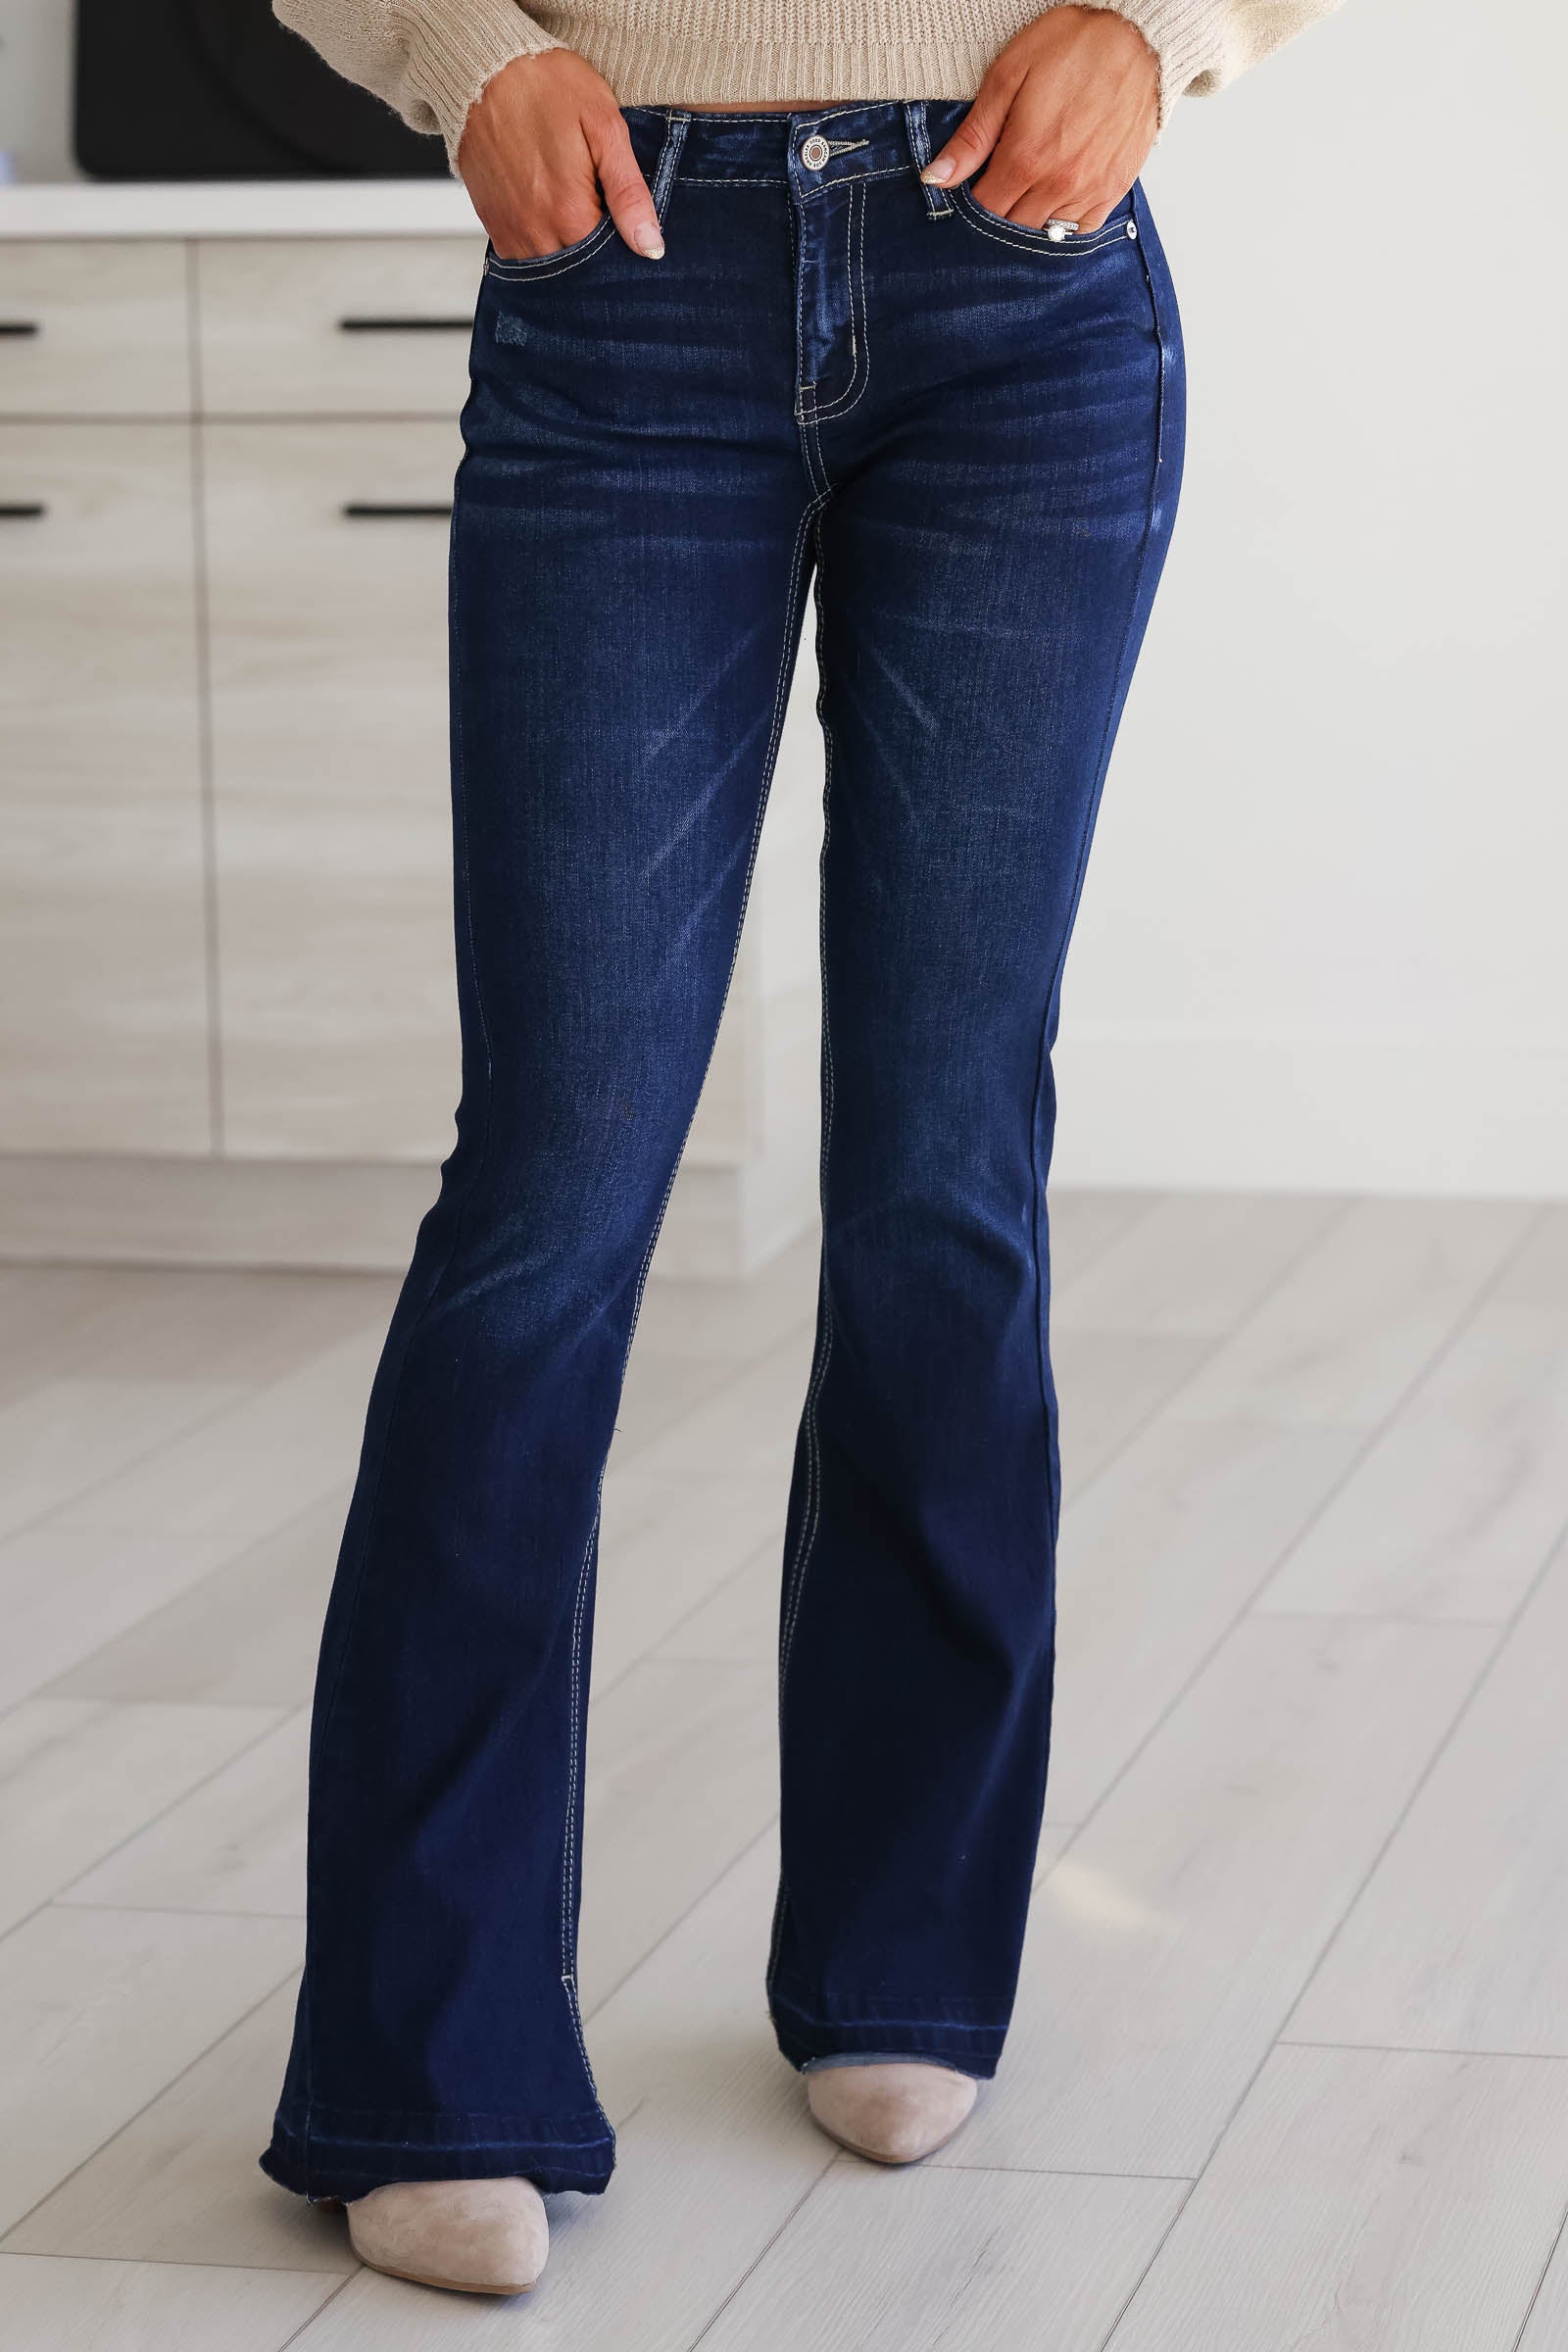 KANCAN Heidi Mid Rise Flare Jeans - Dark Wash, Closet Candy, 1